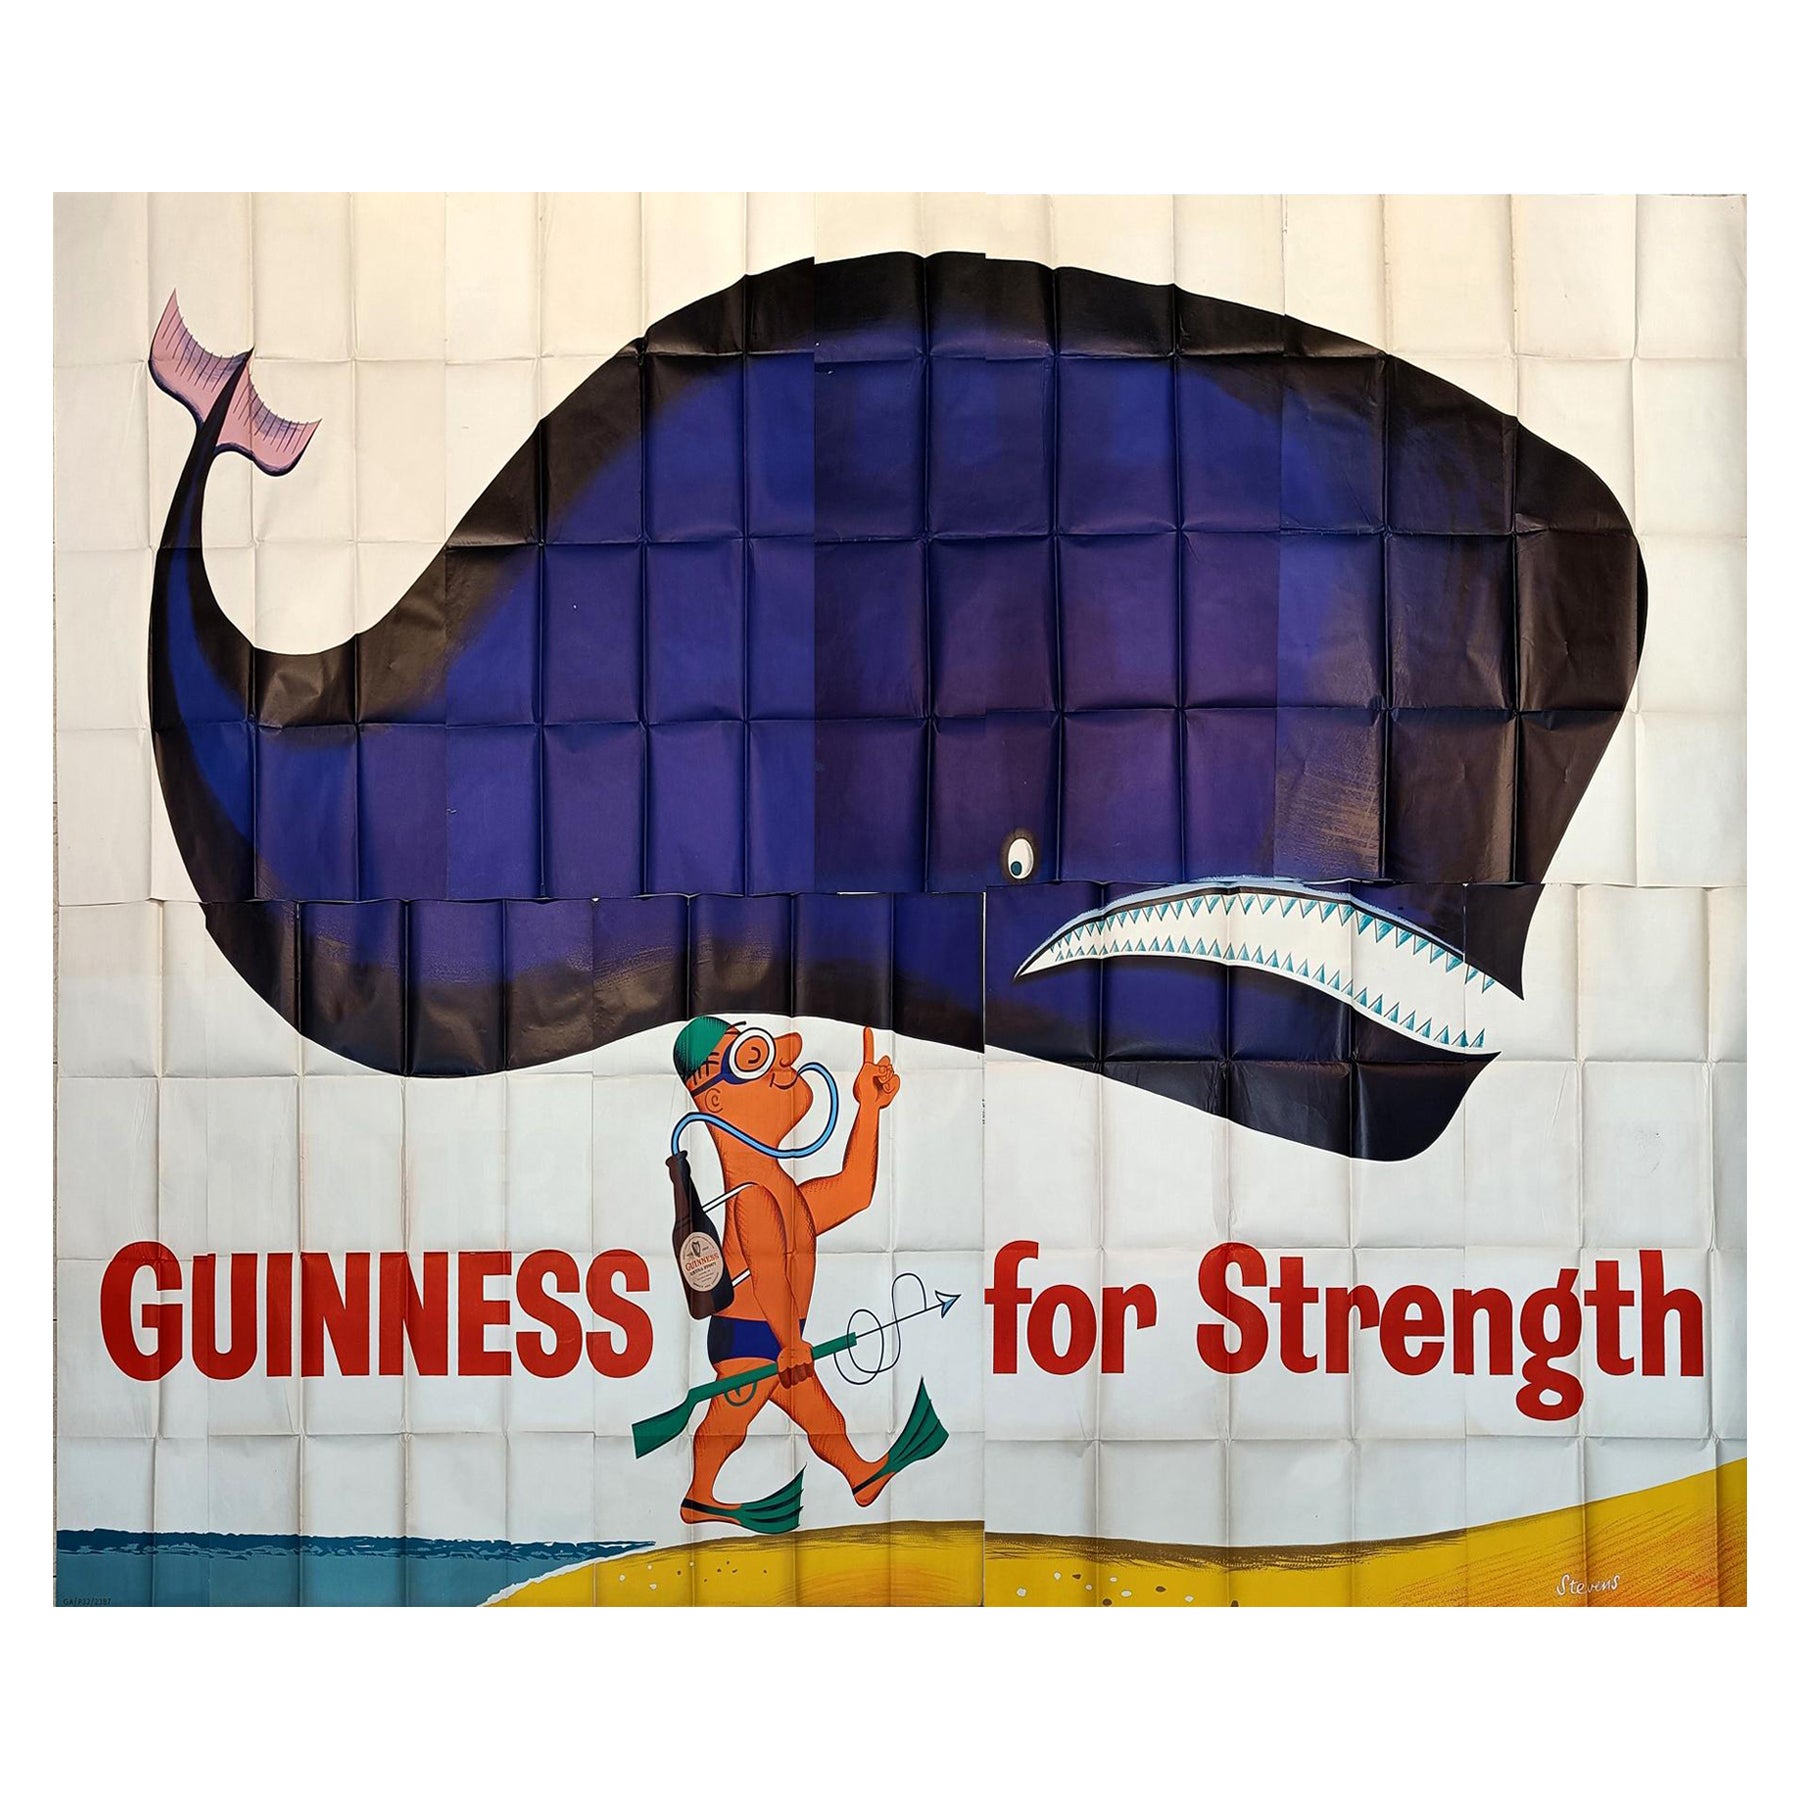 Large Original Vintage Billboard Poster Guinness For Strength Scuba Diver Whale